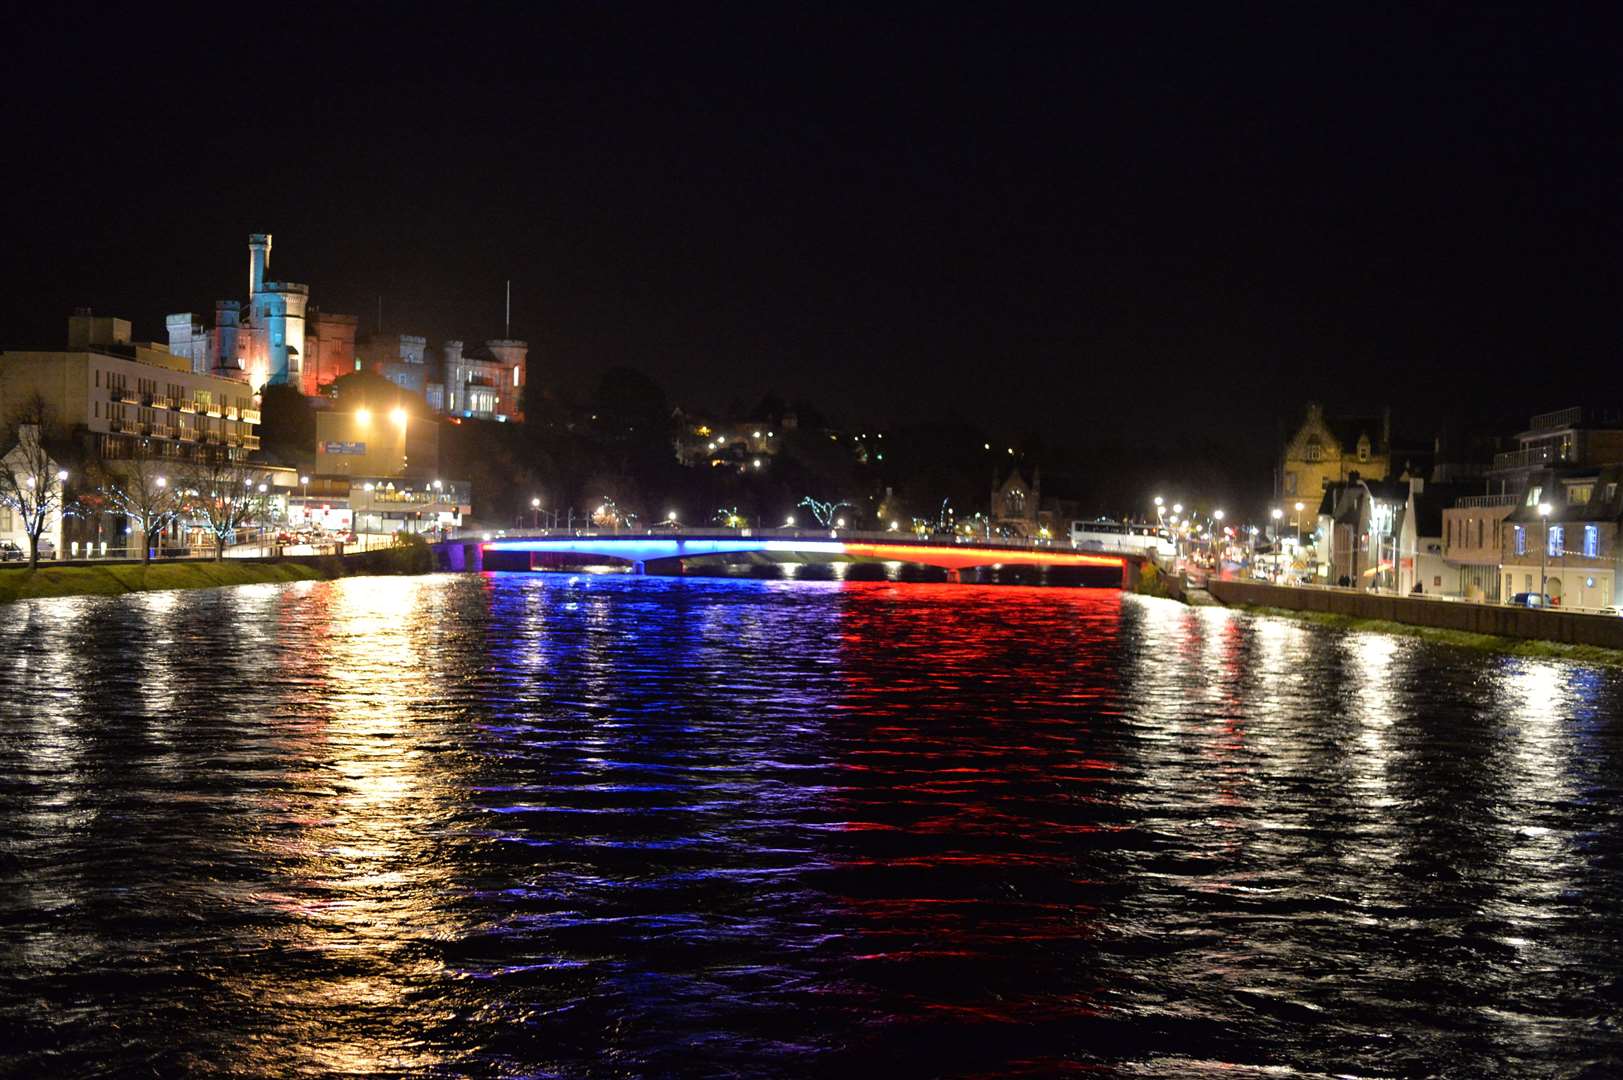 Ness Bridge illuminations are now part of the river landscape.